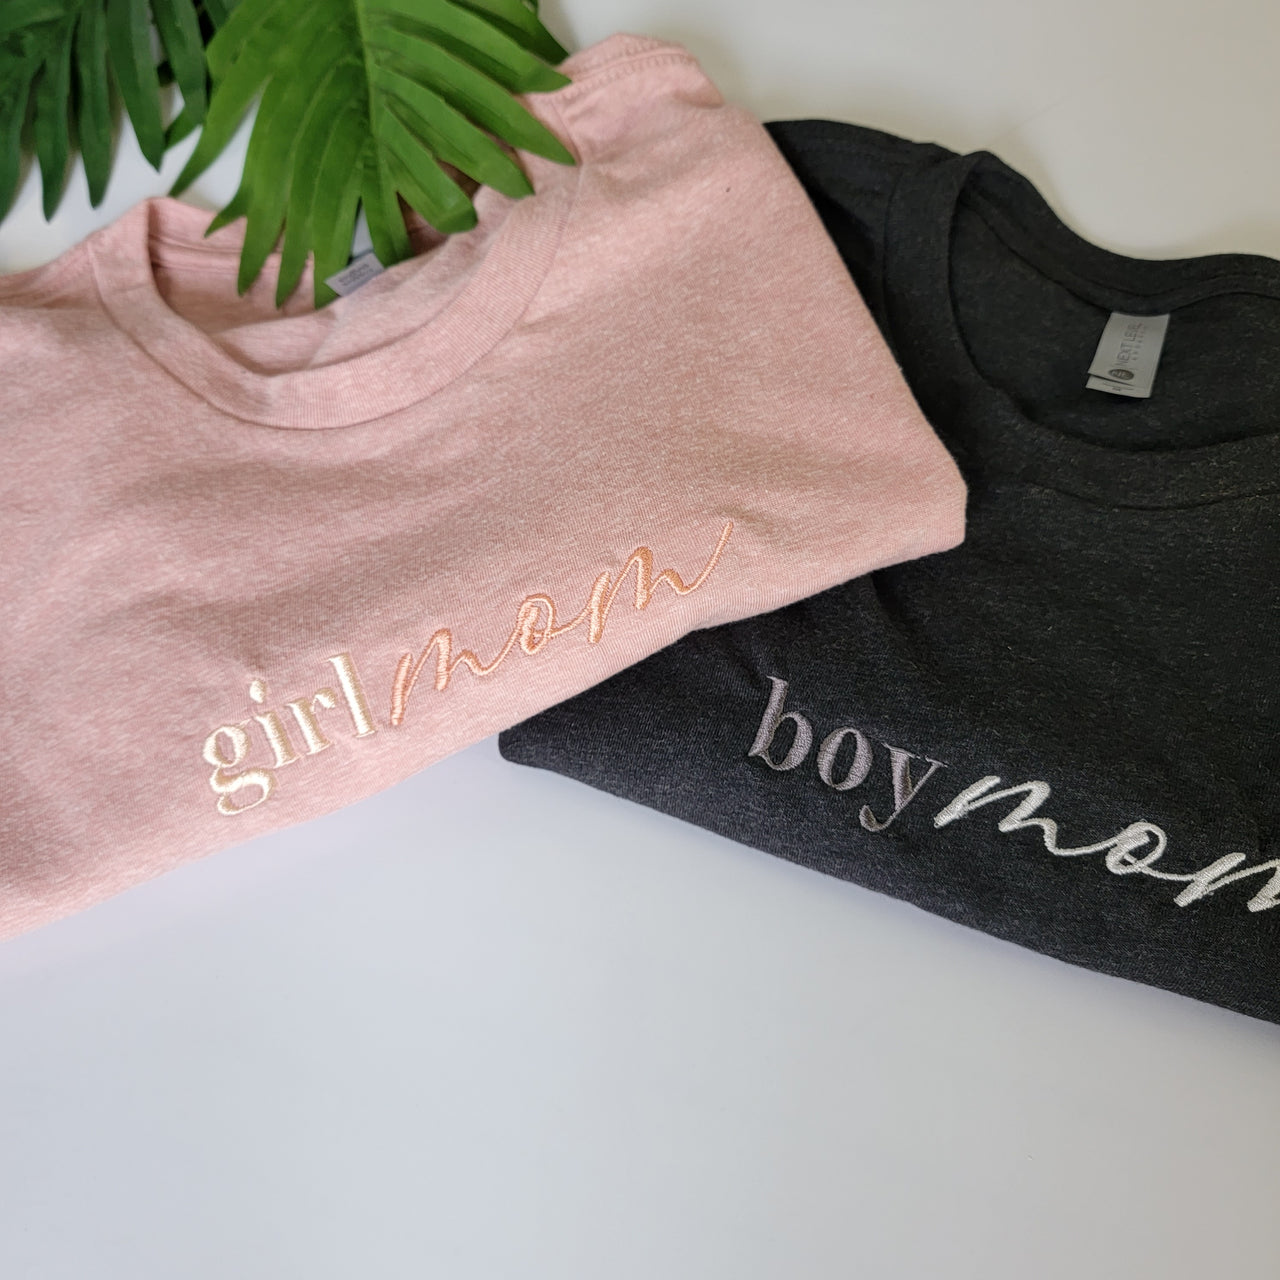 Boy Mom/Girl Mom Shirt